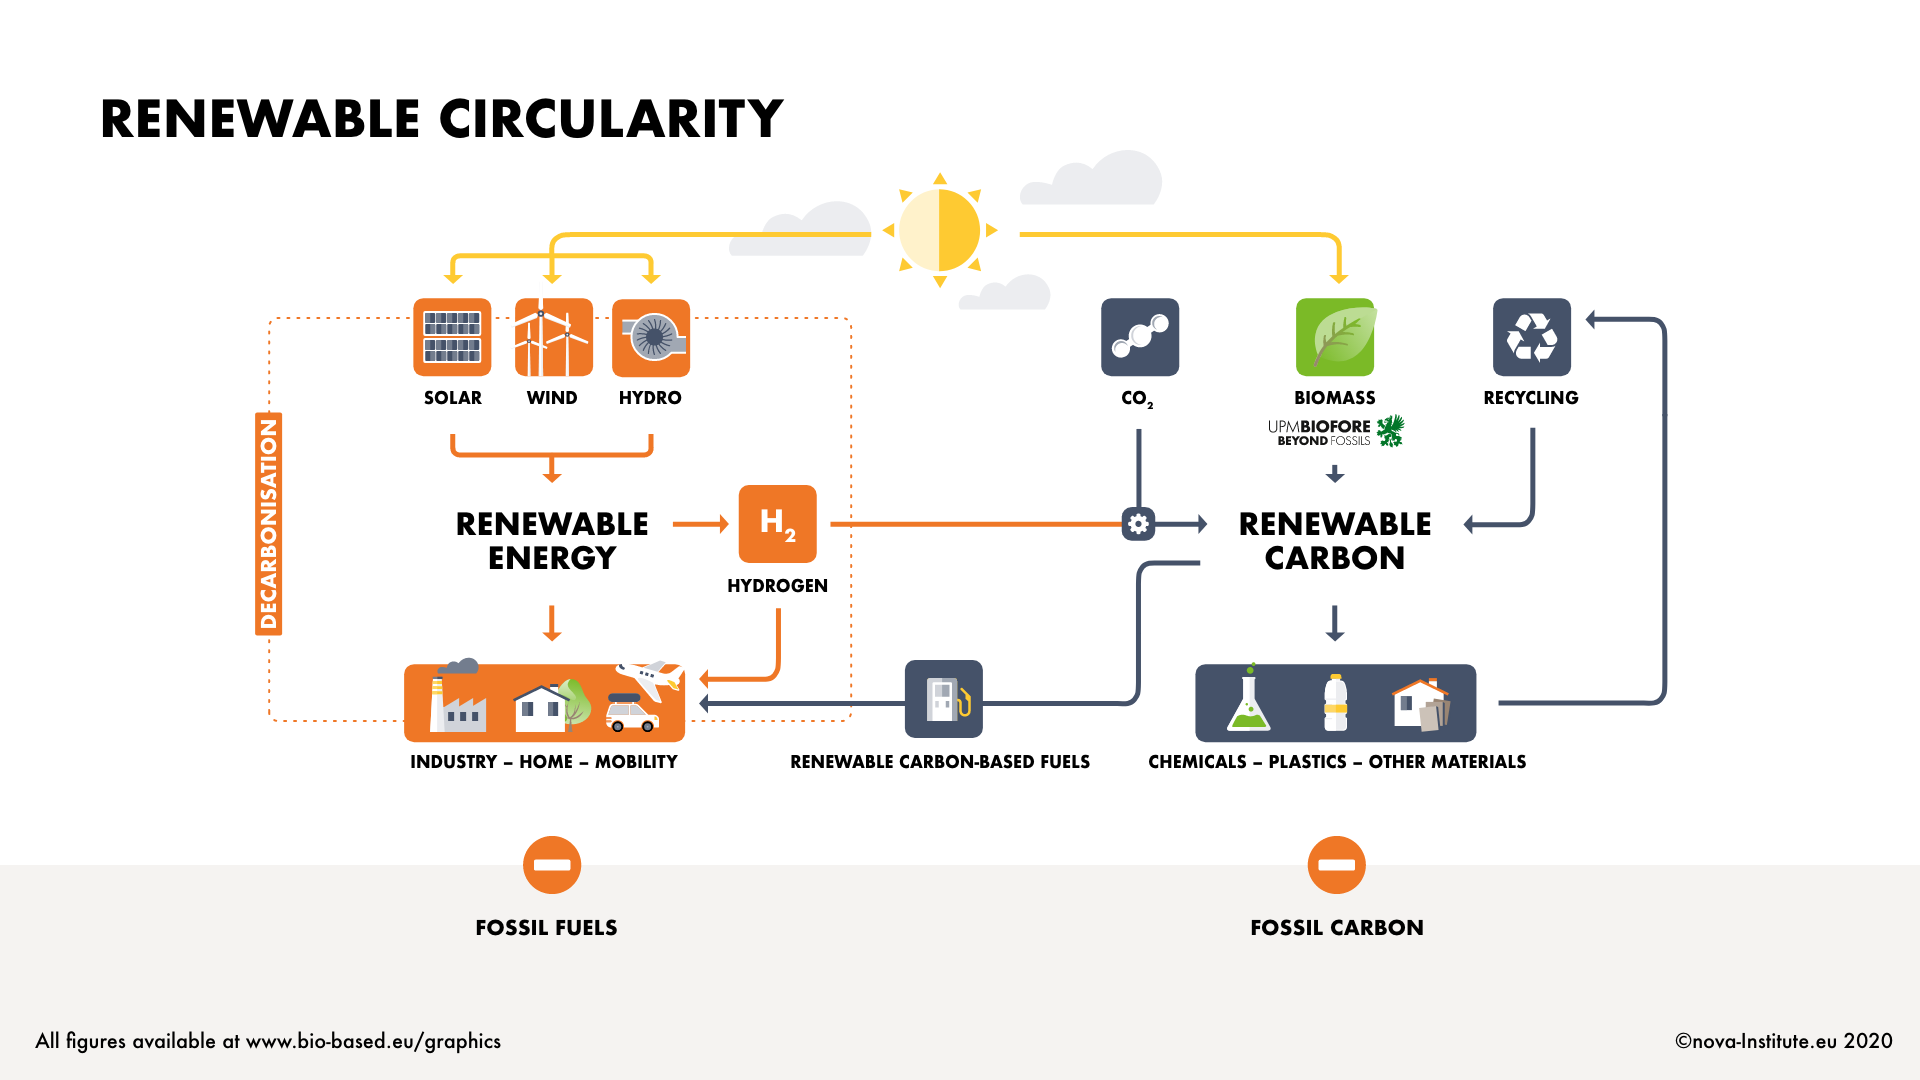 Renewable circularity